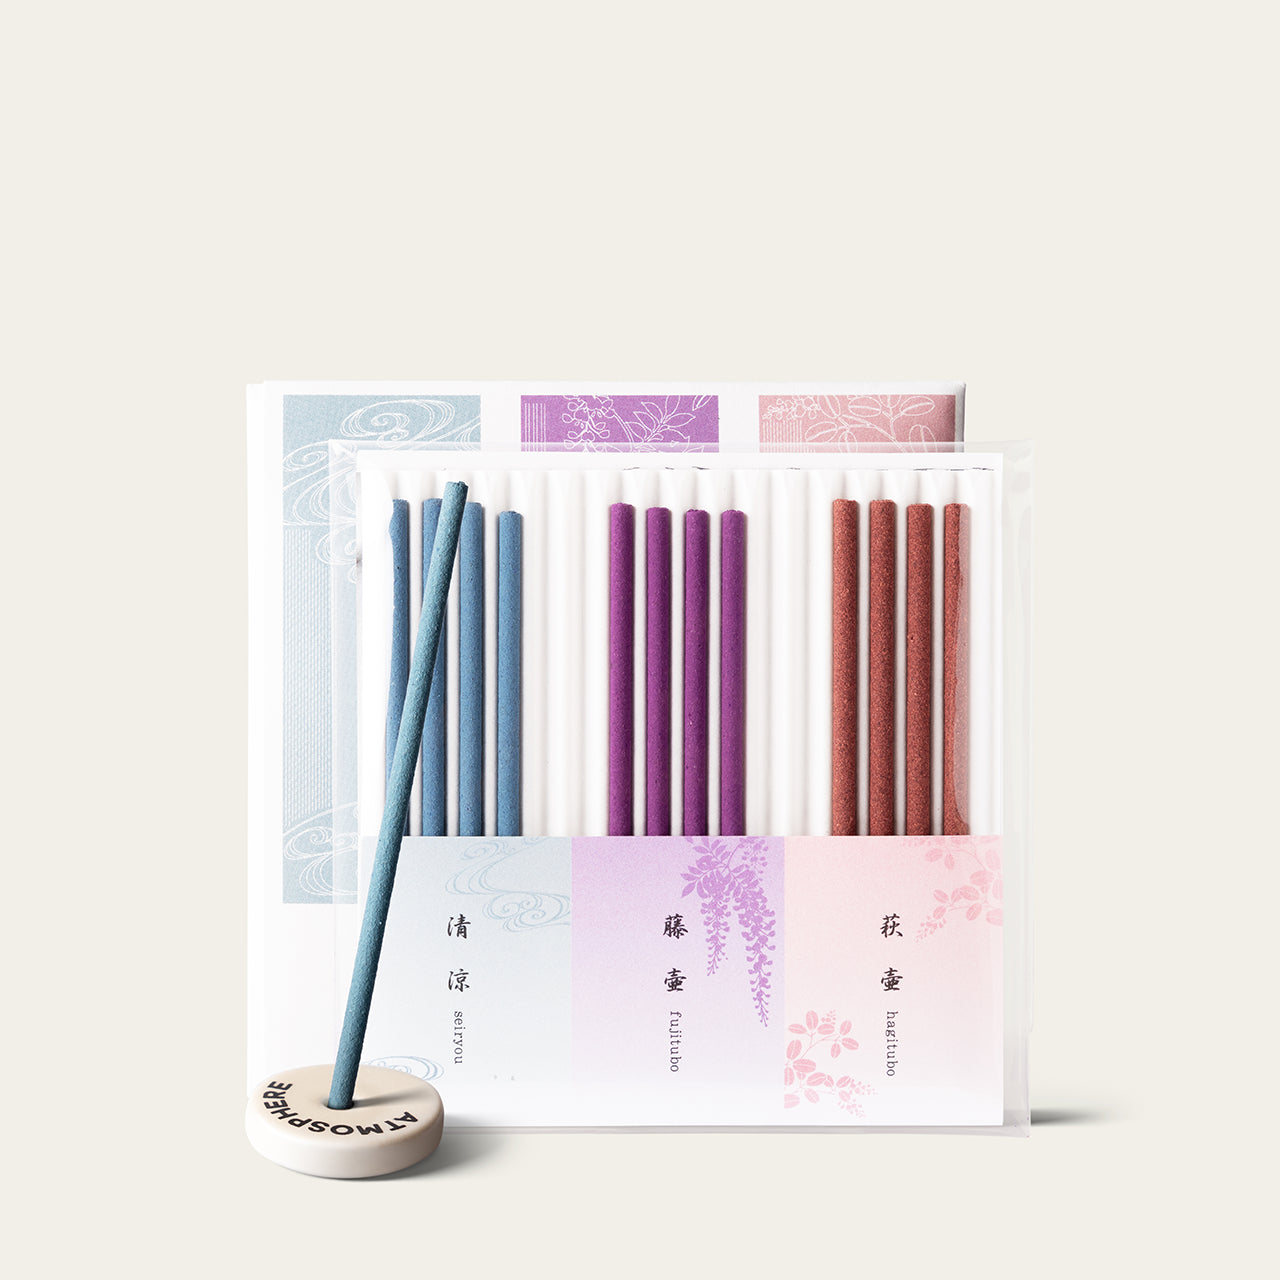 Yamadamatsu Rakuen Discovery Set Japanese incense sticks (12 sticks) with Atmosphere ceramic incense holder